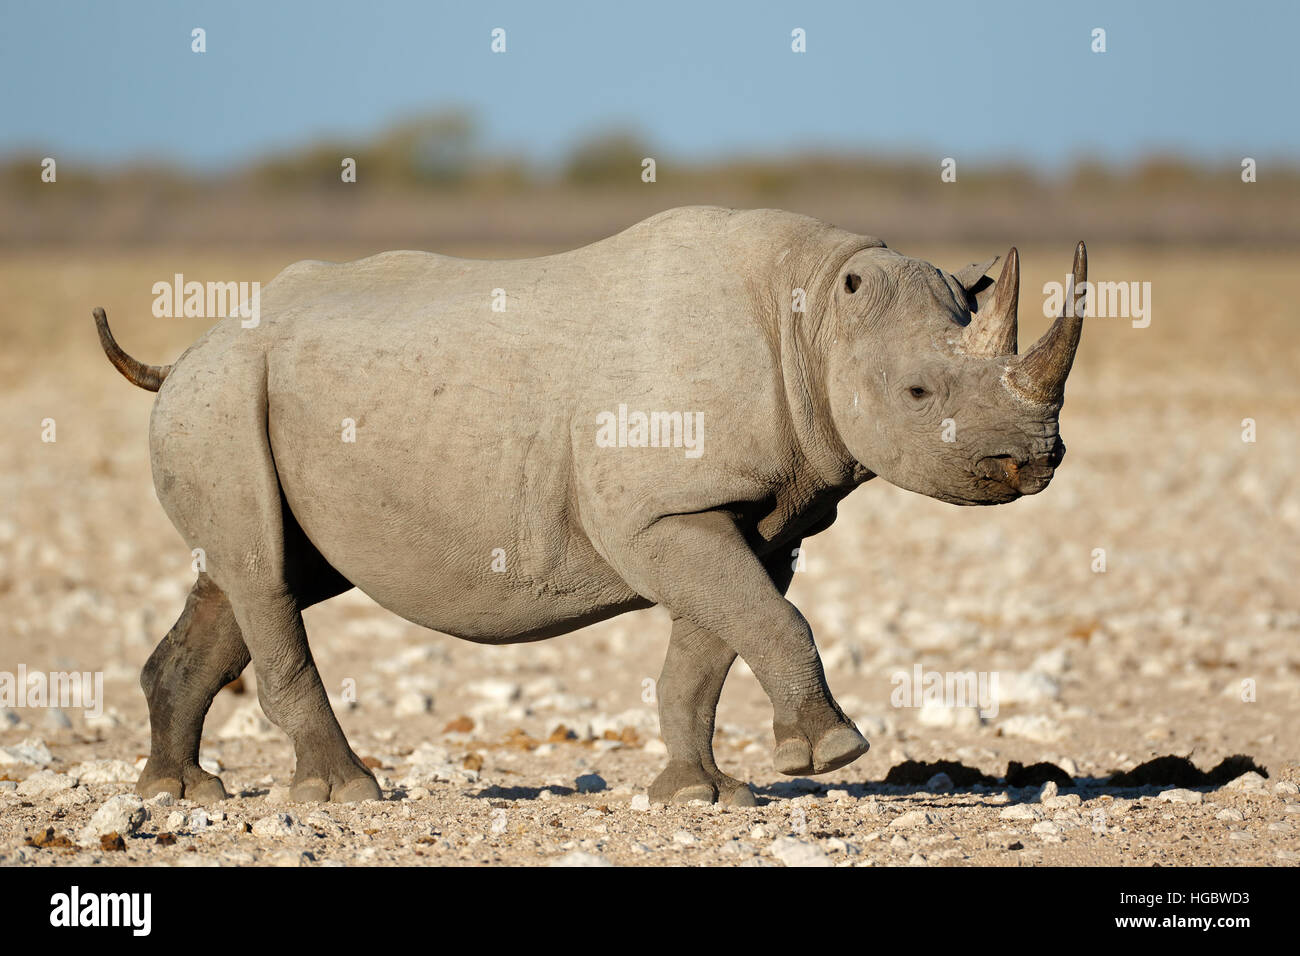 A black rhinoceros (Diceros bicornis) in natural habitat, Etosha National Park, Namibia Stock Photo